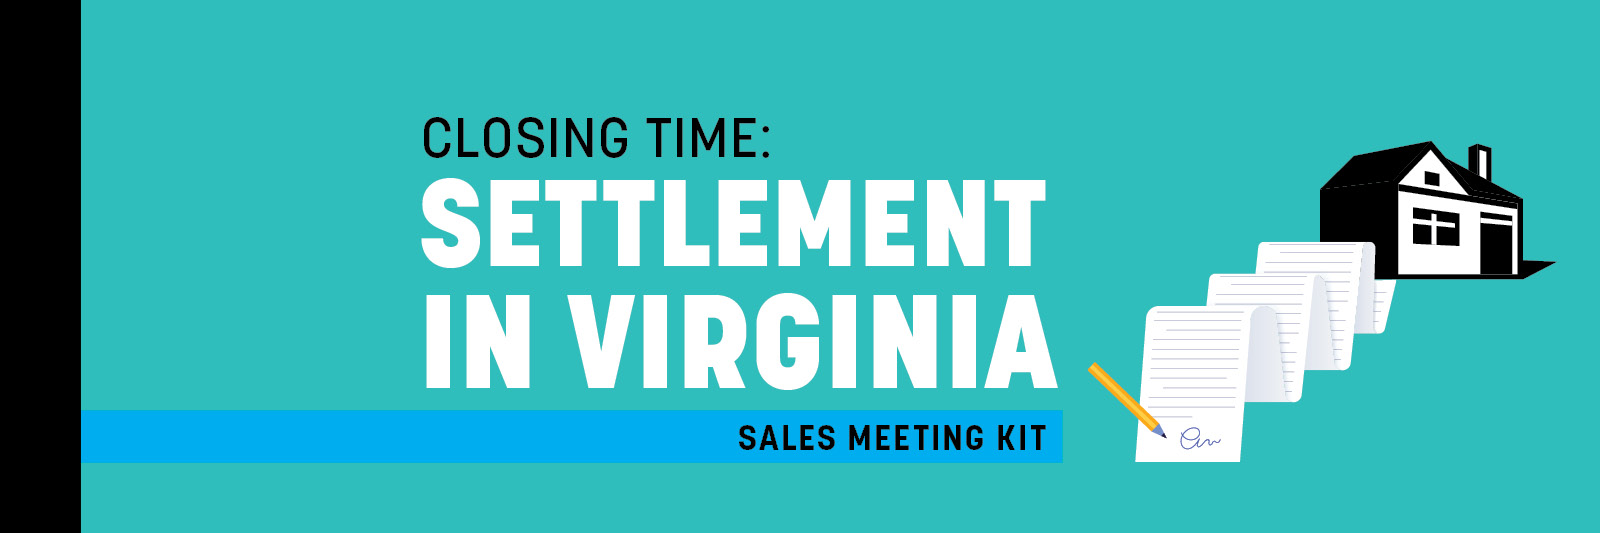 Settlement: Sales meeting kit